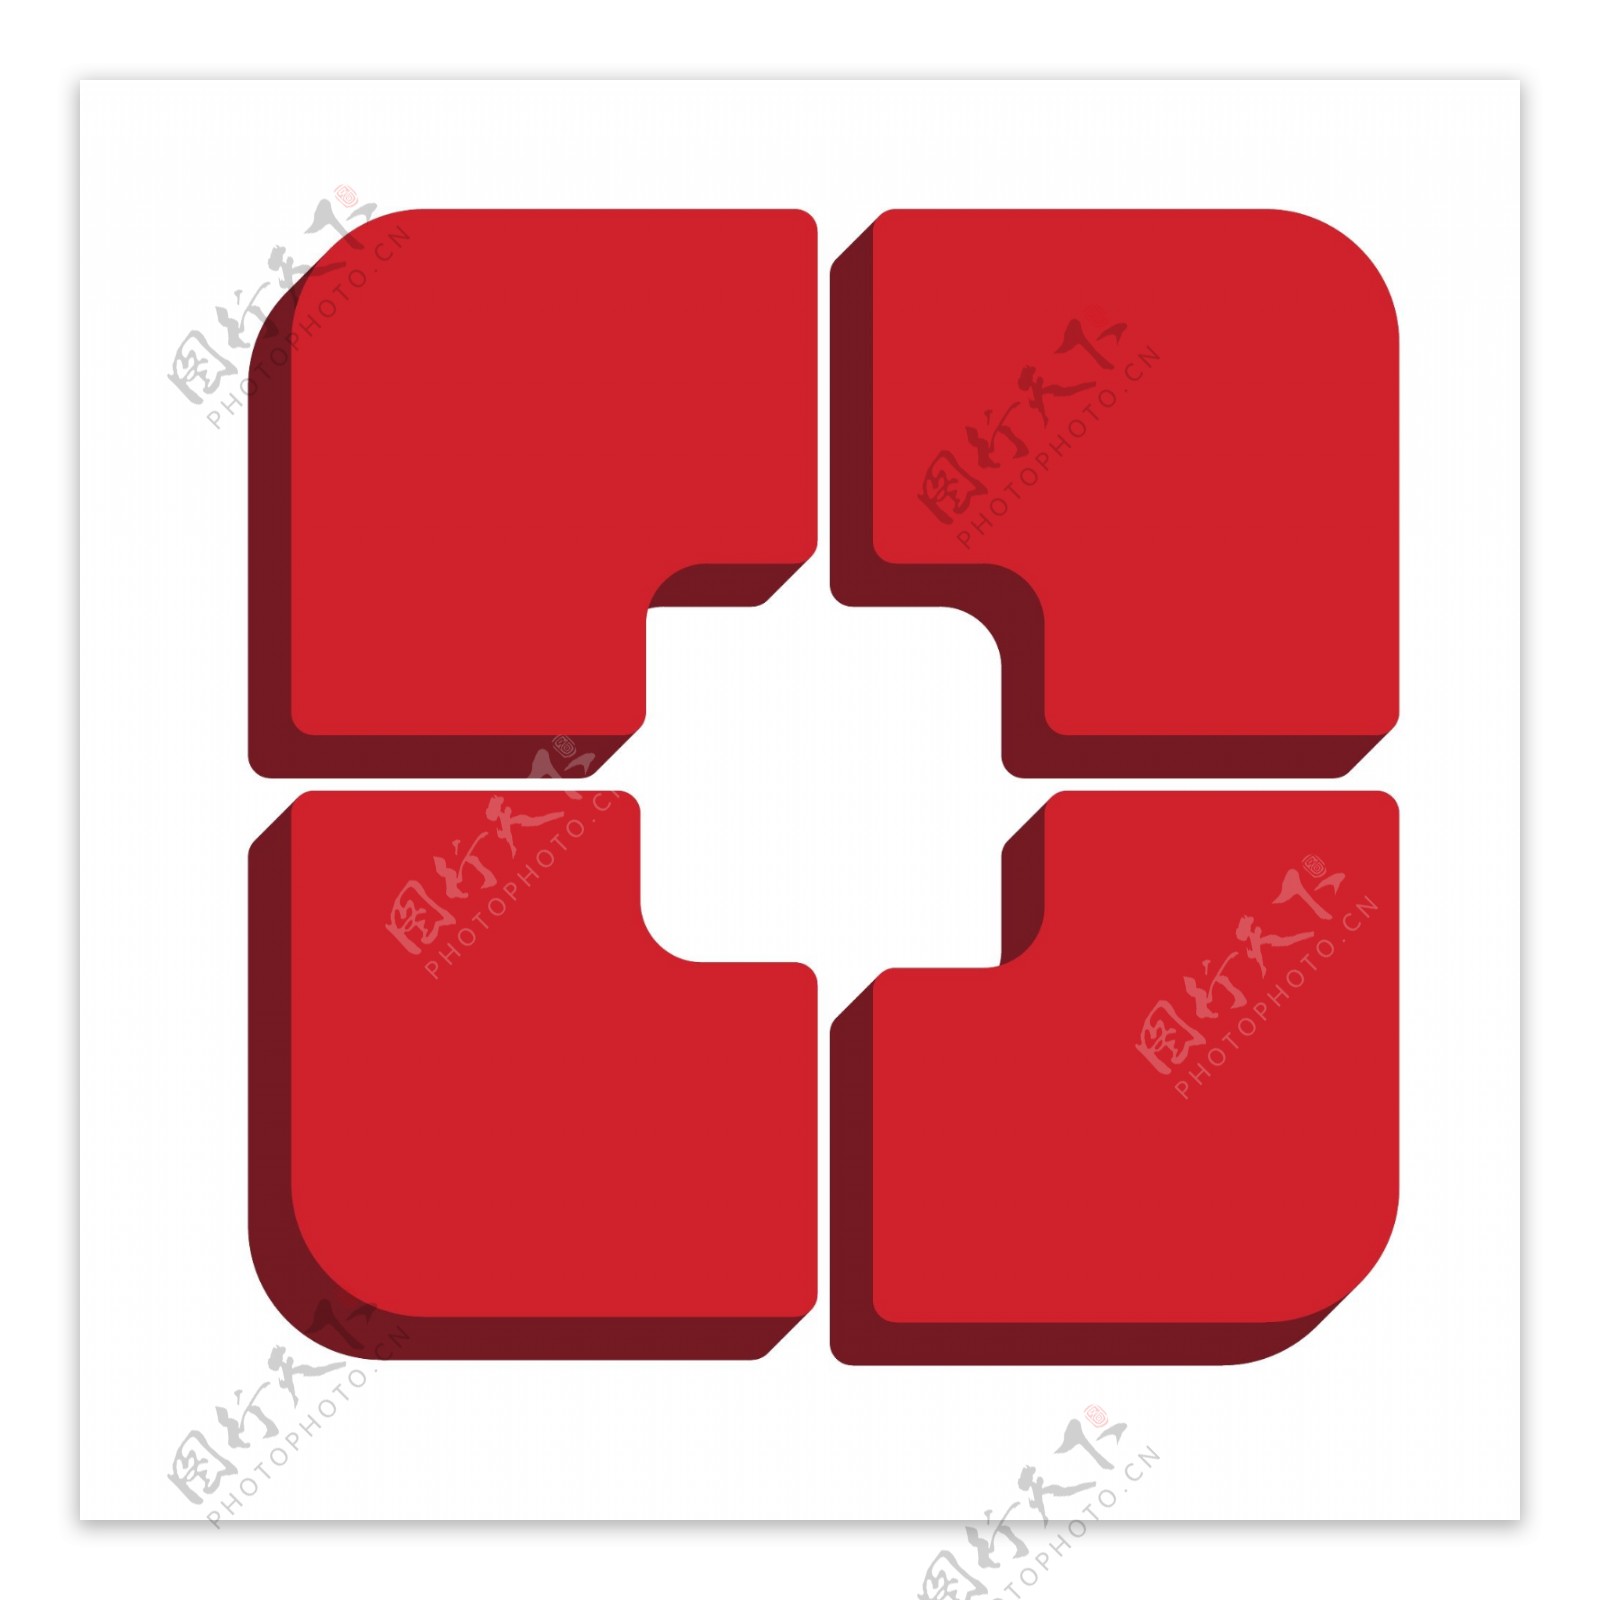 2.5D红色盛京银行手机应用LOGO图标